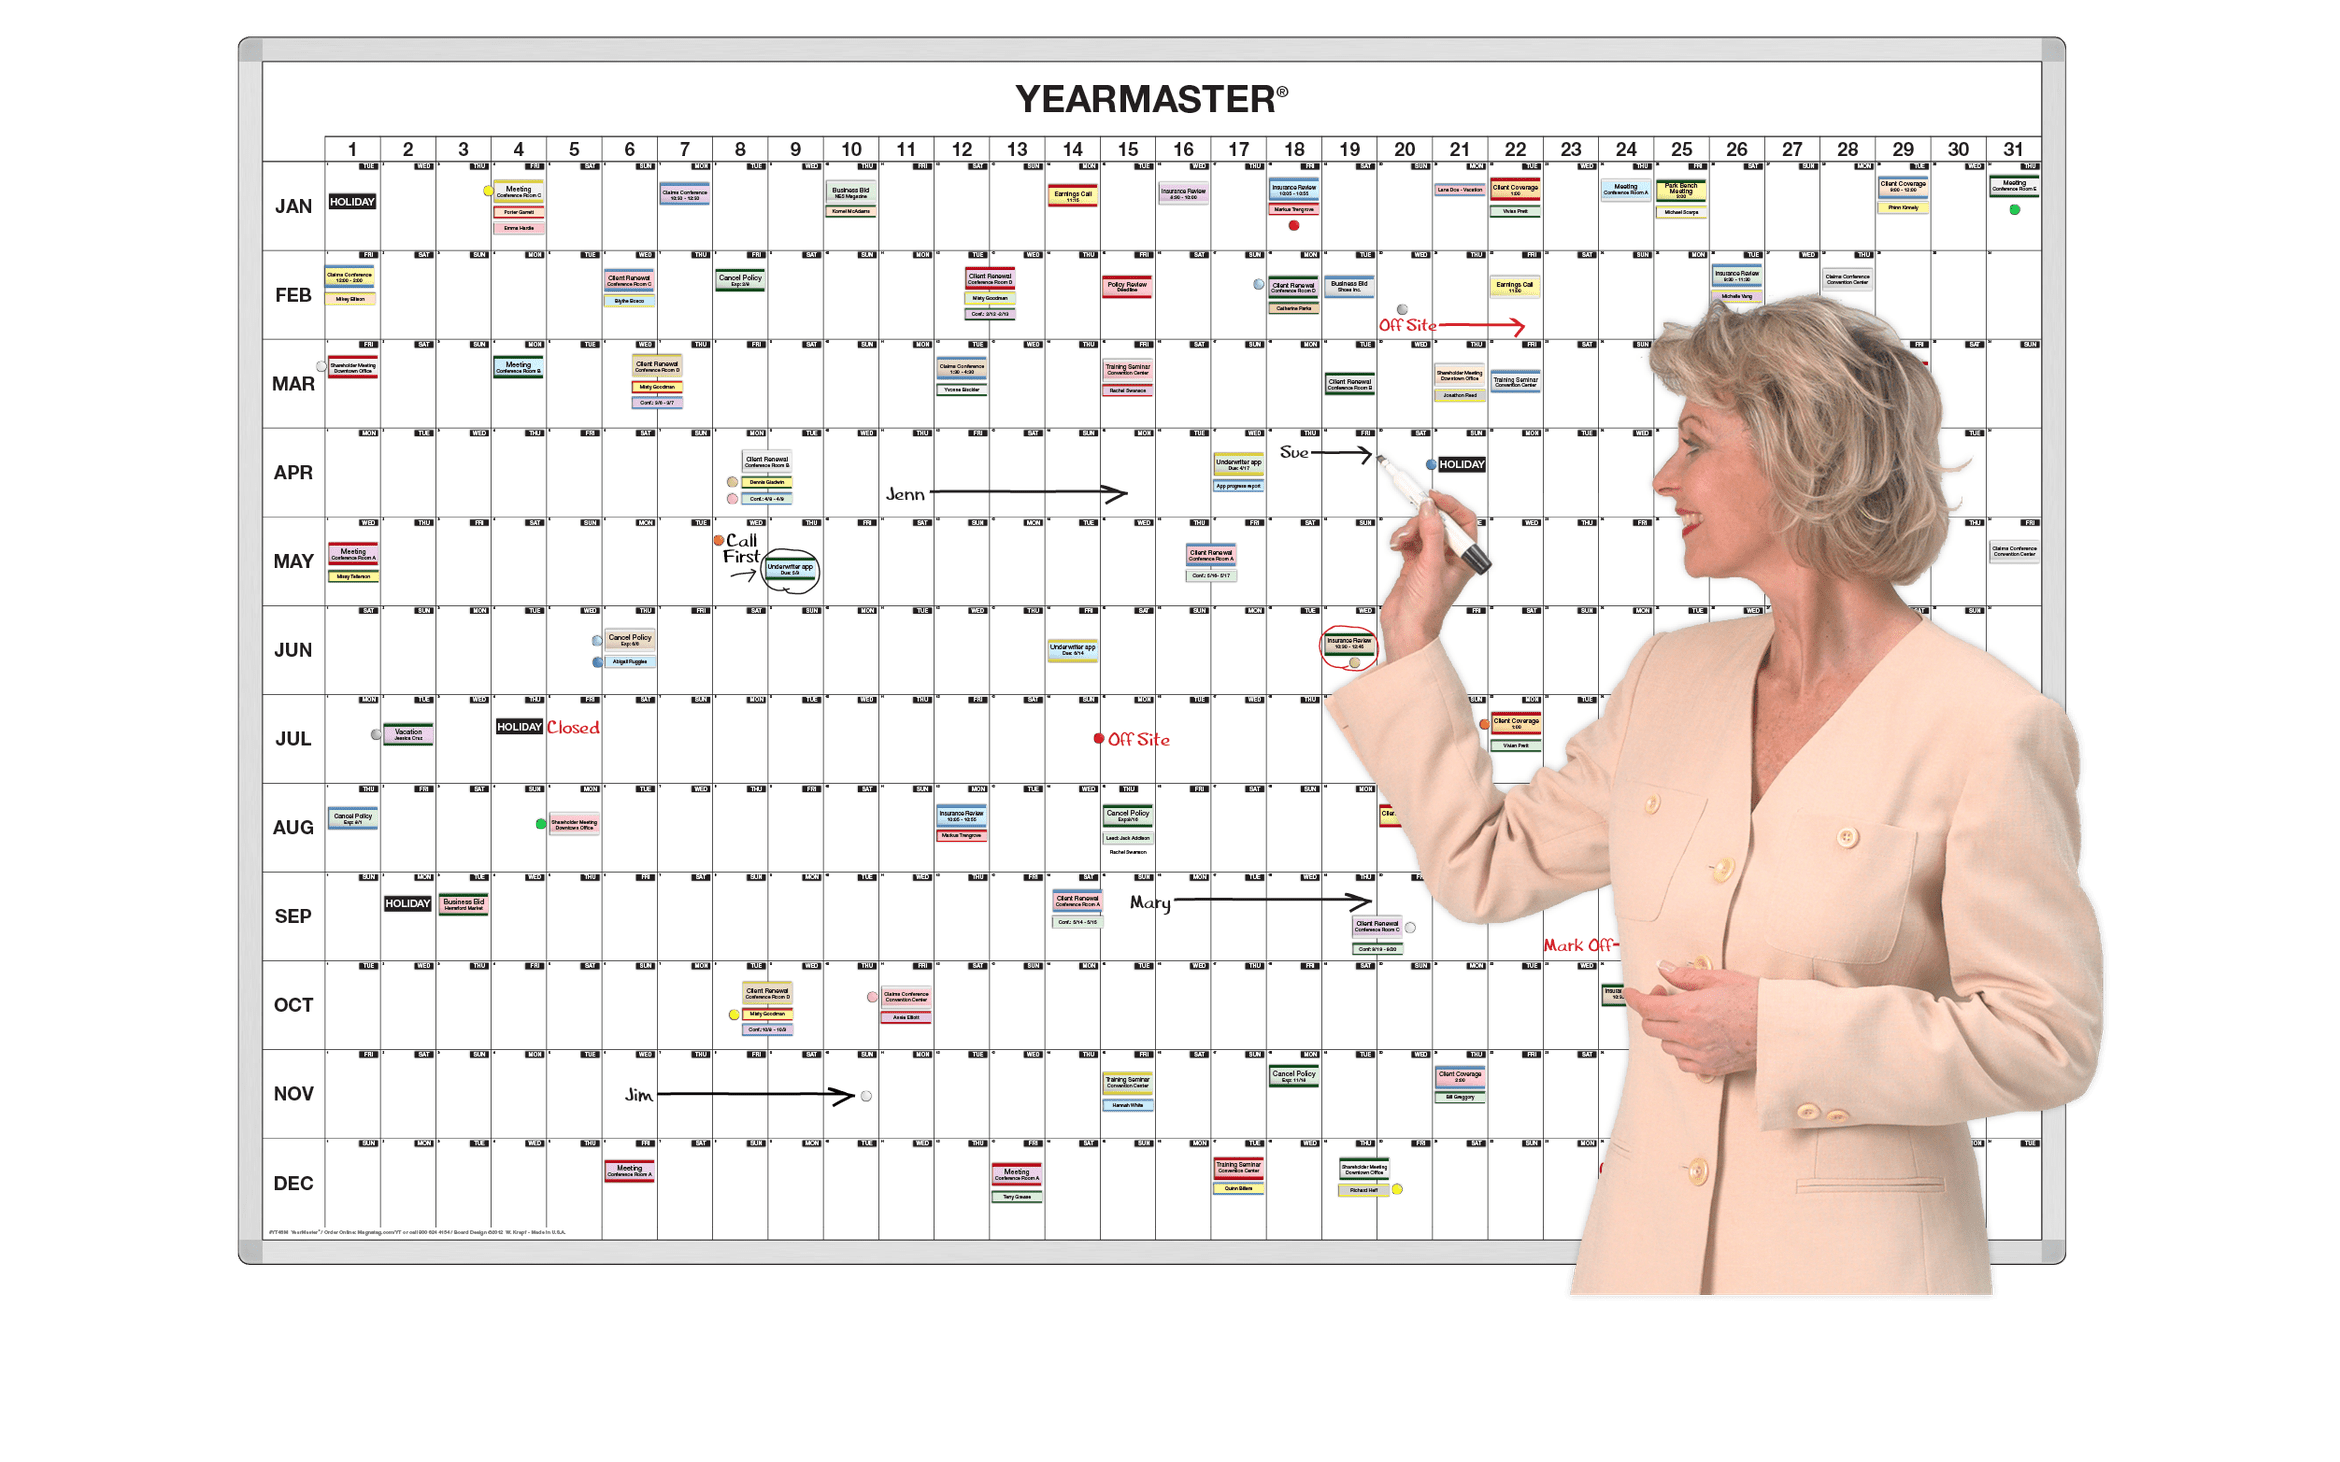 Master 365 Day Magnetic Whiteboard Timeline Calendar